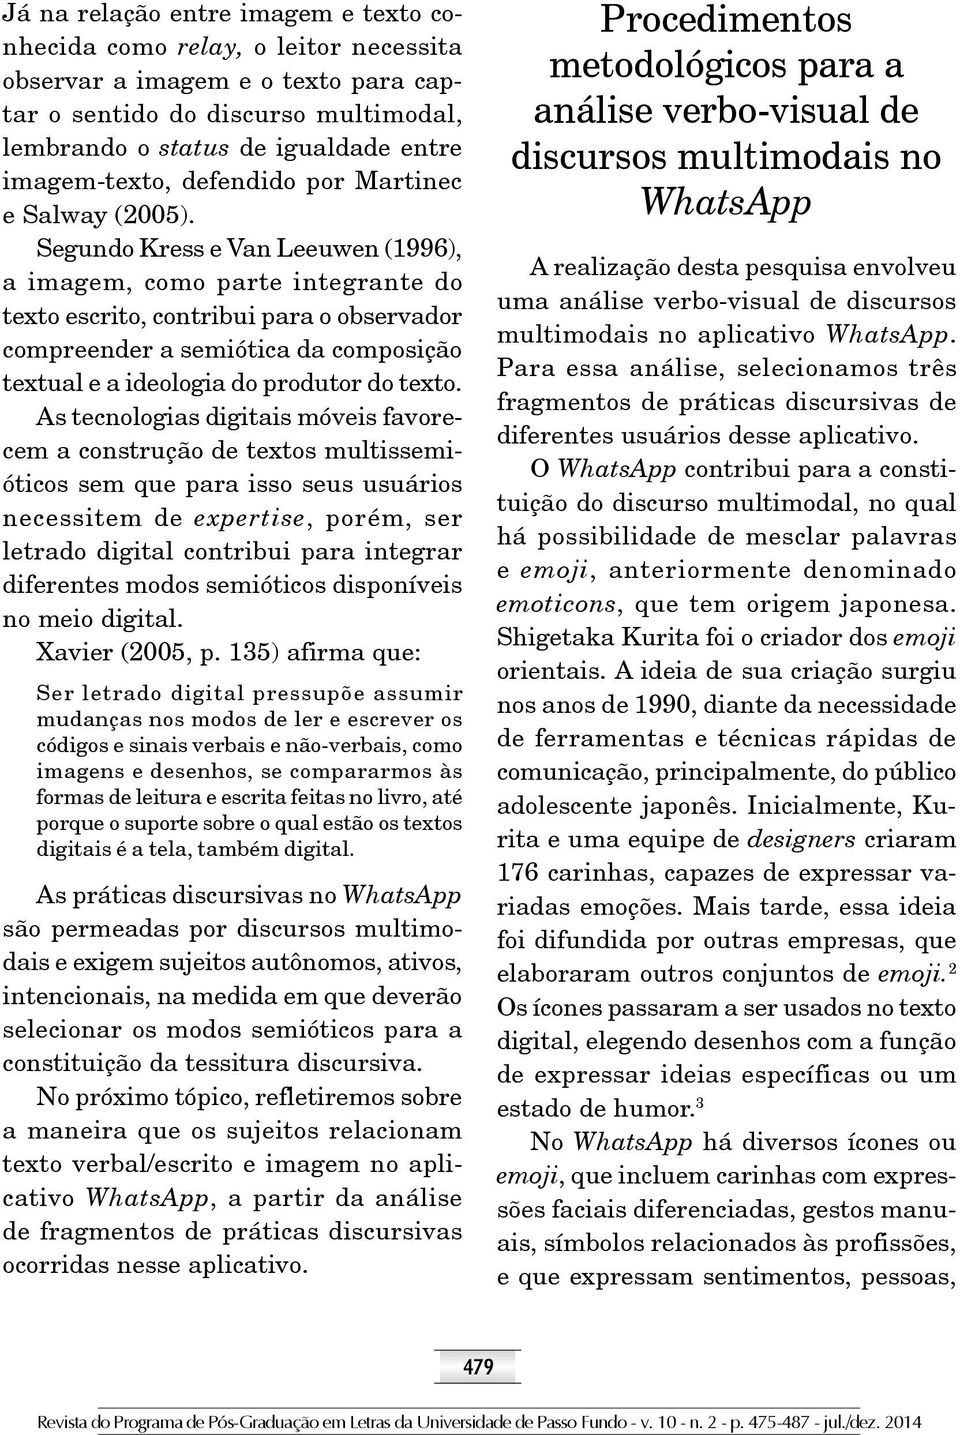 Segundo Kress e Van Leeuwen (1996), a imagem, como parte integrante do texto escrito, contribui para o observador compreender a semiótica da composição textual e a ideologia do produtor do texto.